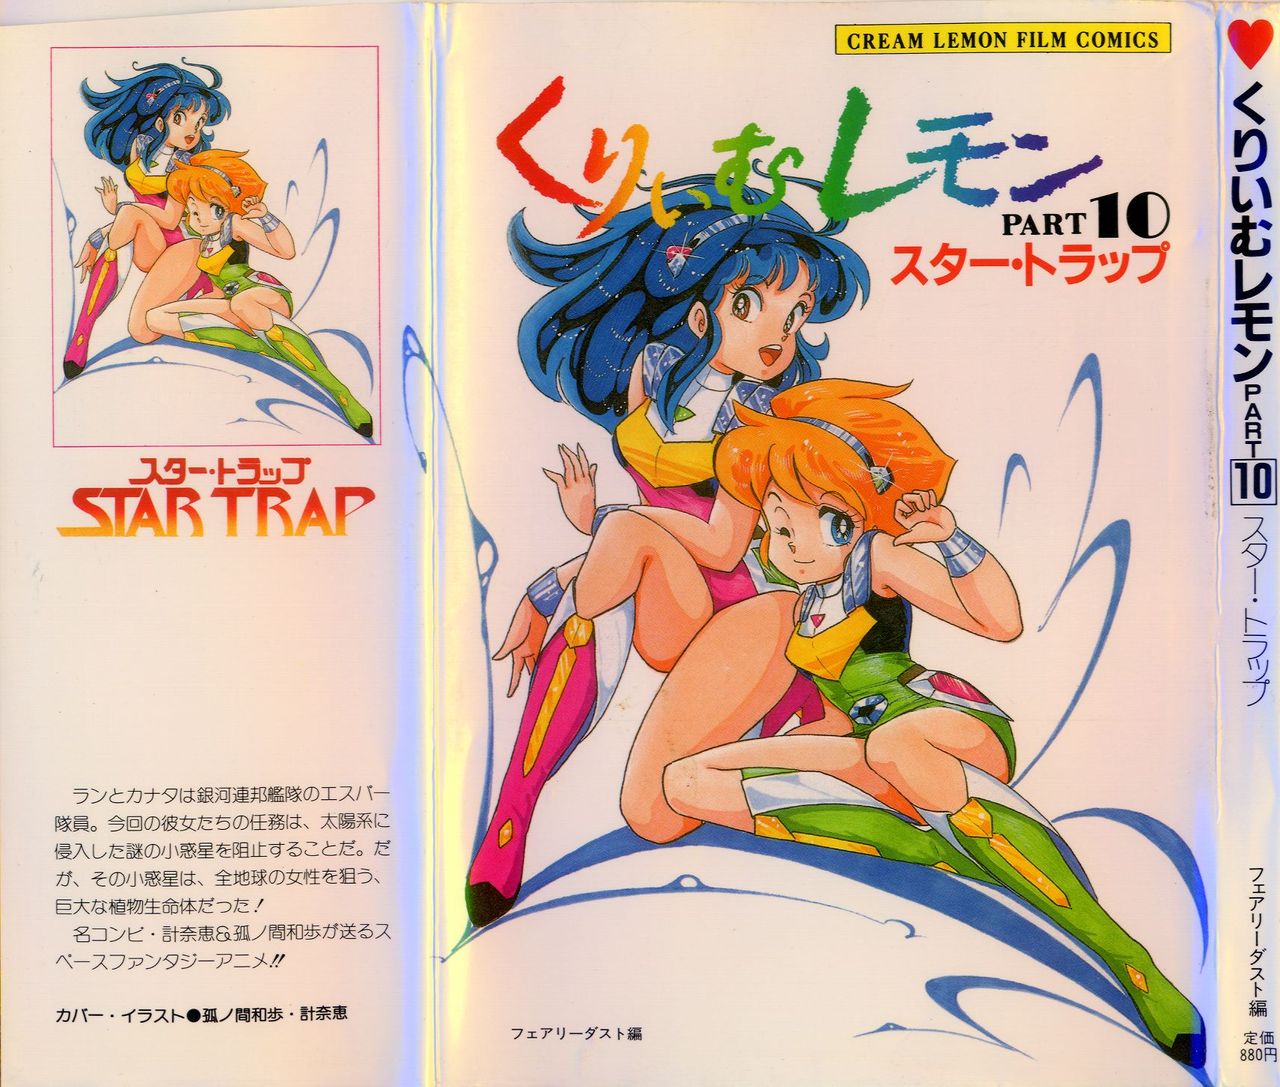 Watch Cream Lemon Film Comics - Cream Lemon Part 10: Star Trap doujinshi an...